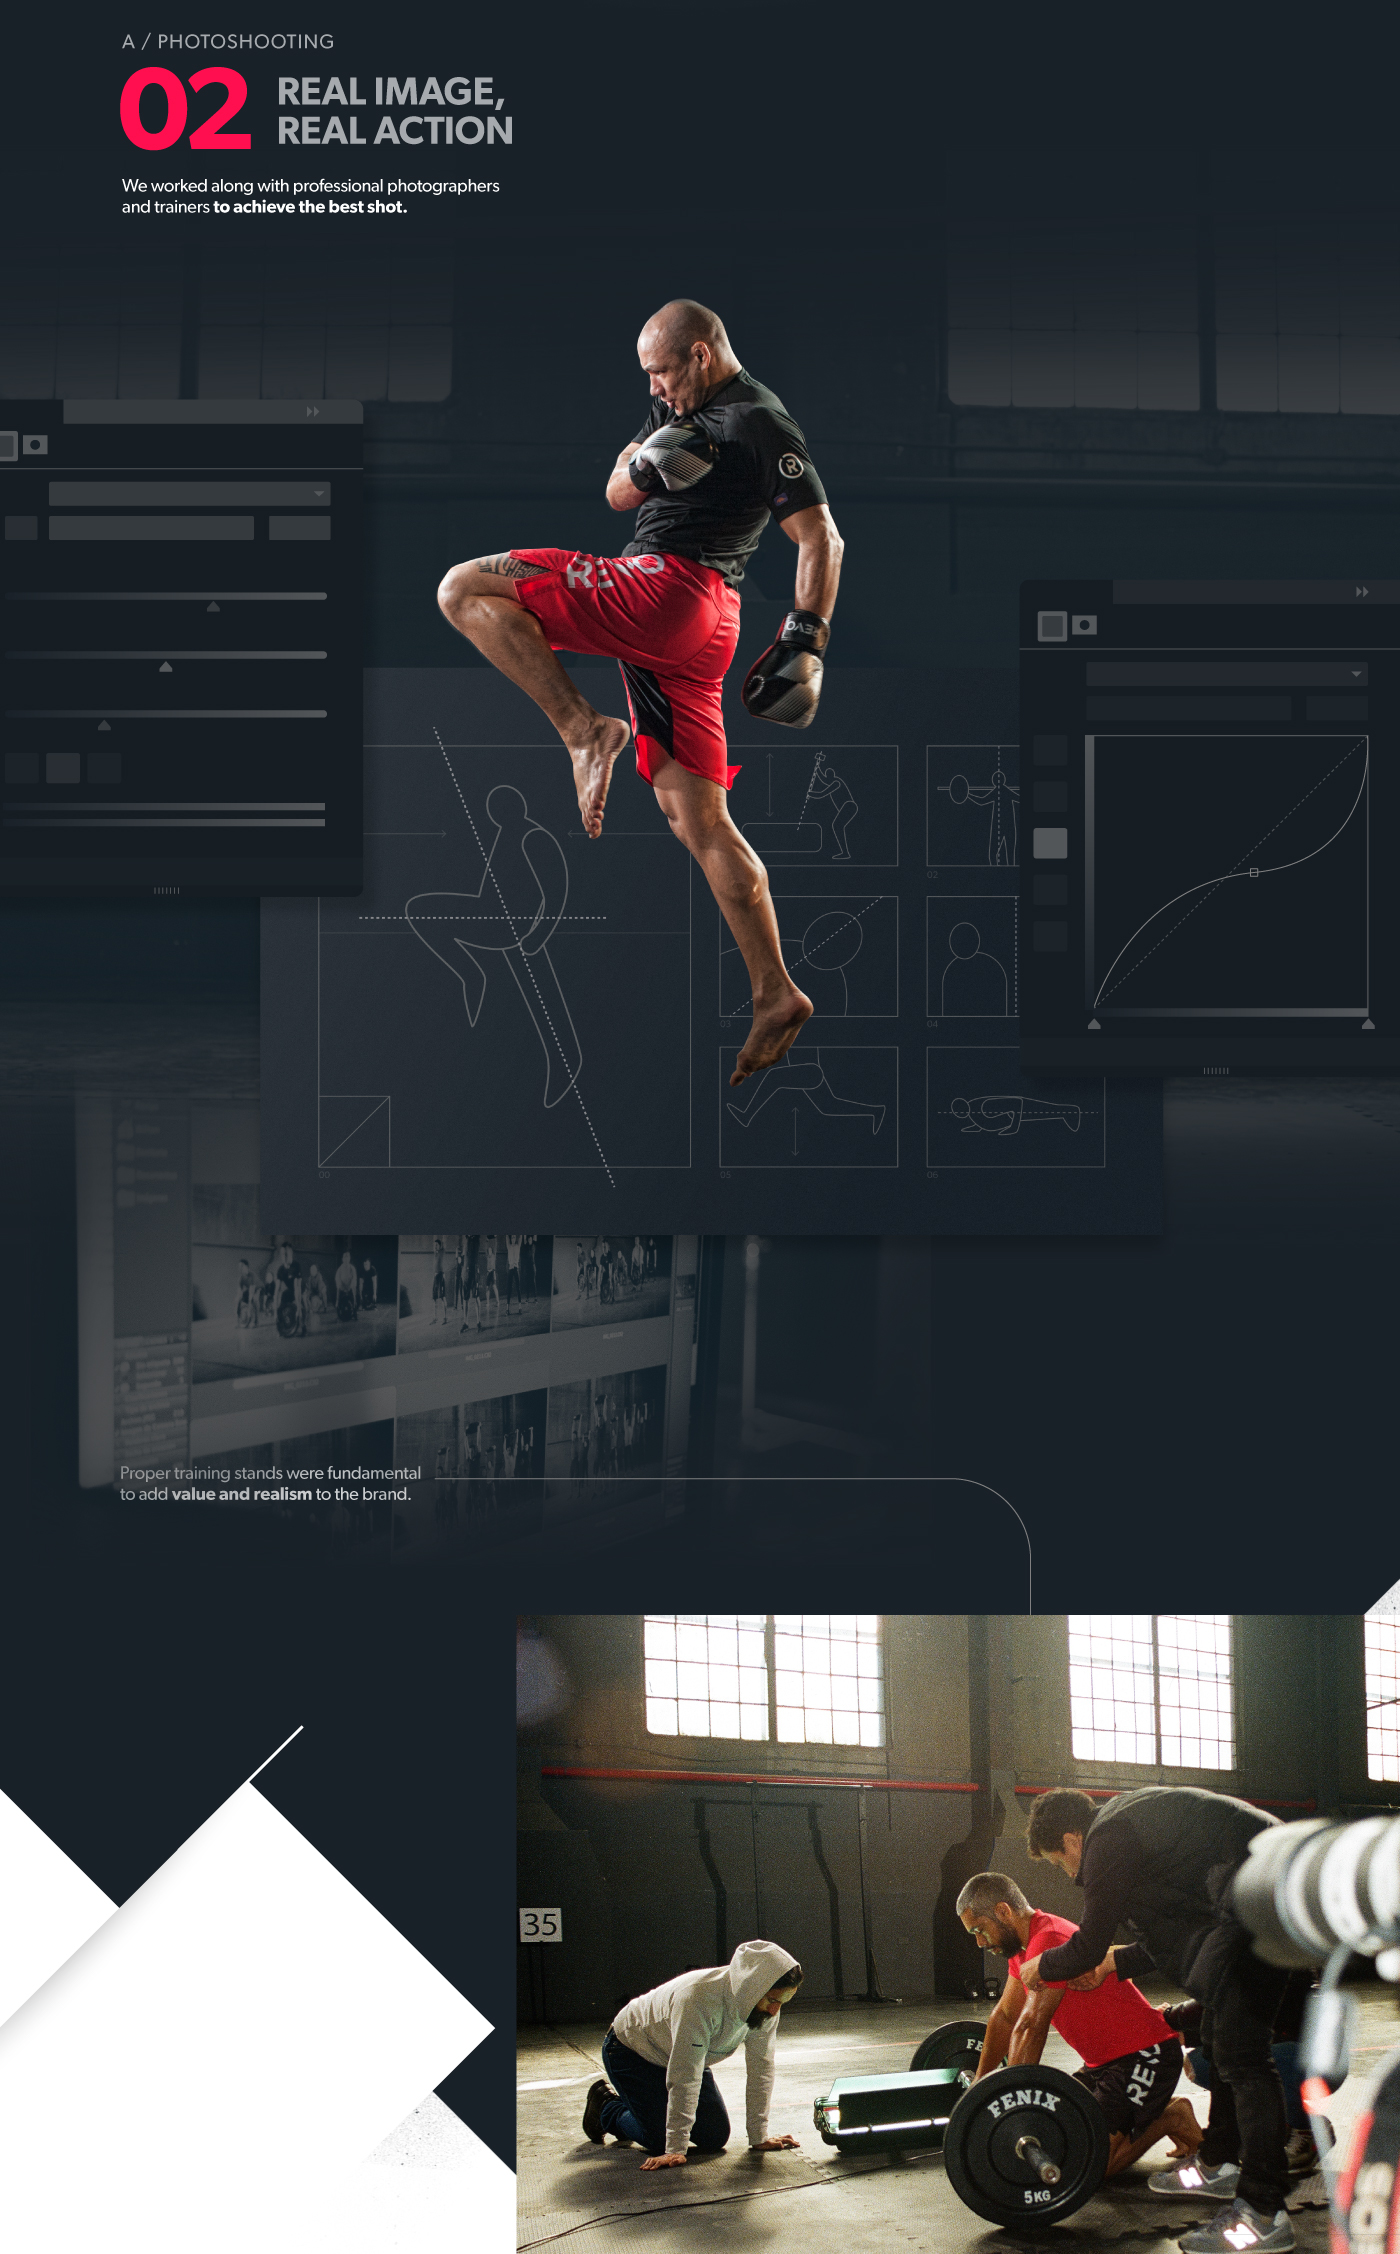 gym brand Kuwait arabic Global sports fitness premium photoshooting digital social media